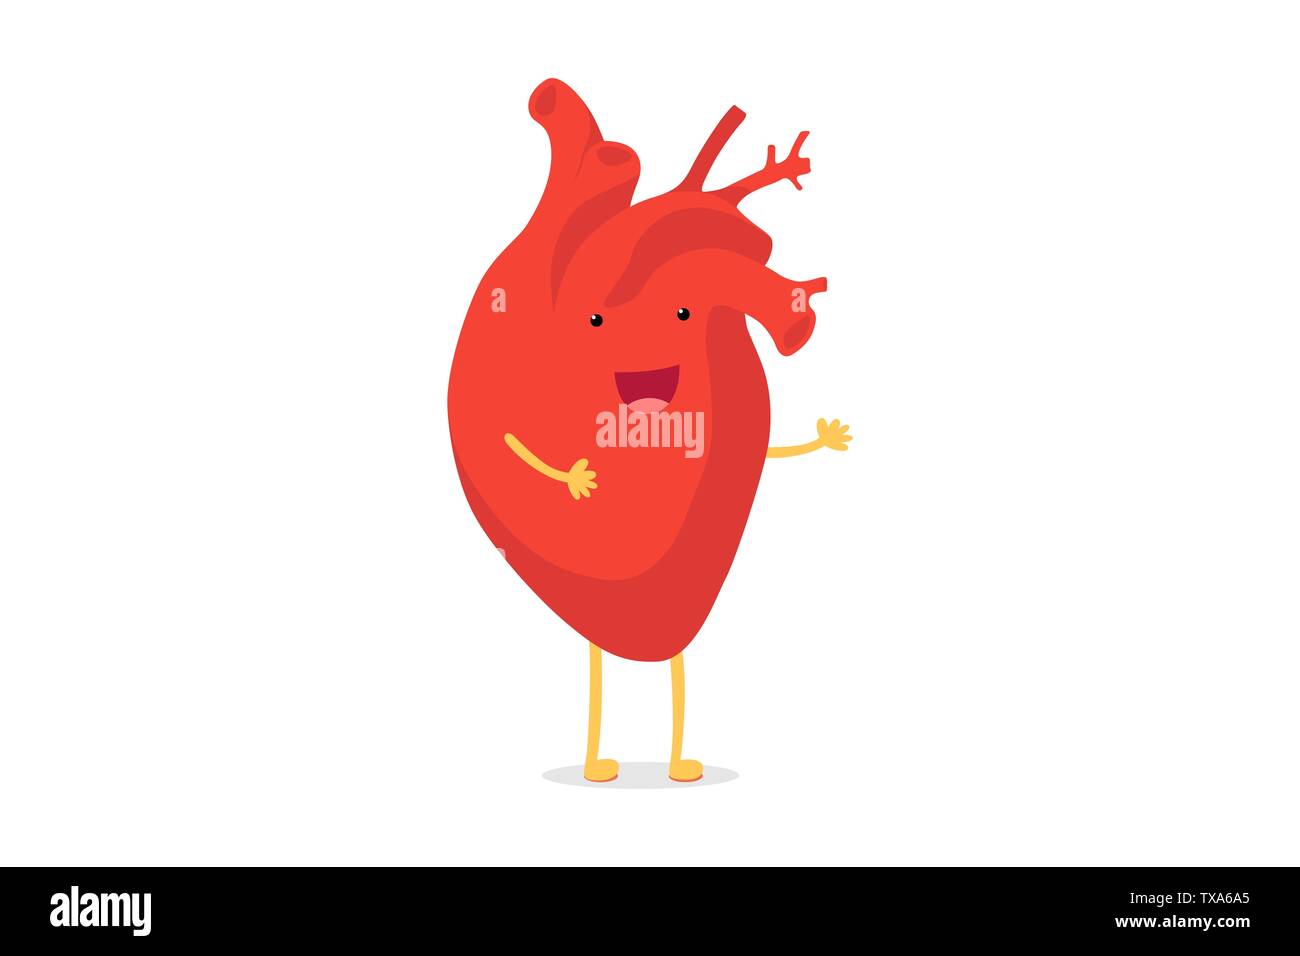 Cute cartoon smiling healthy heart character happy emoji emotion. Funny circulatory organ cardiology. Vector illustration Stock Vector